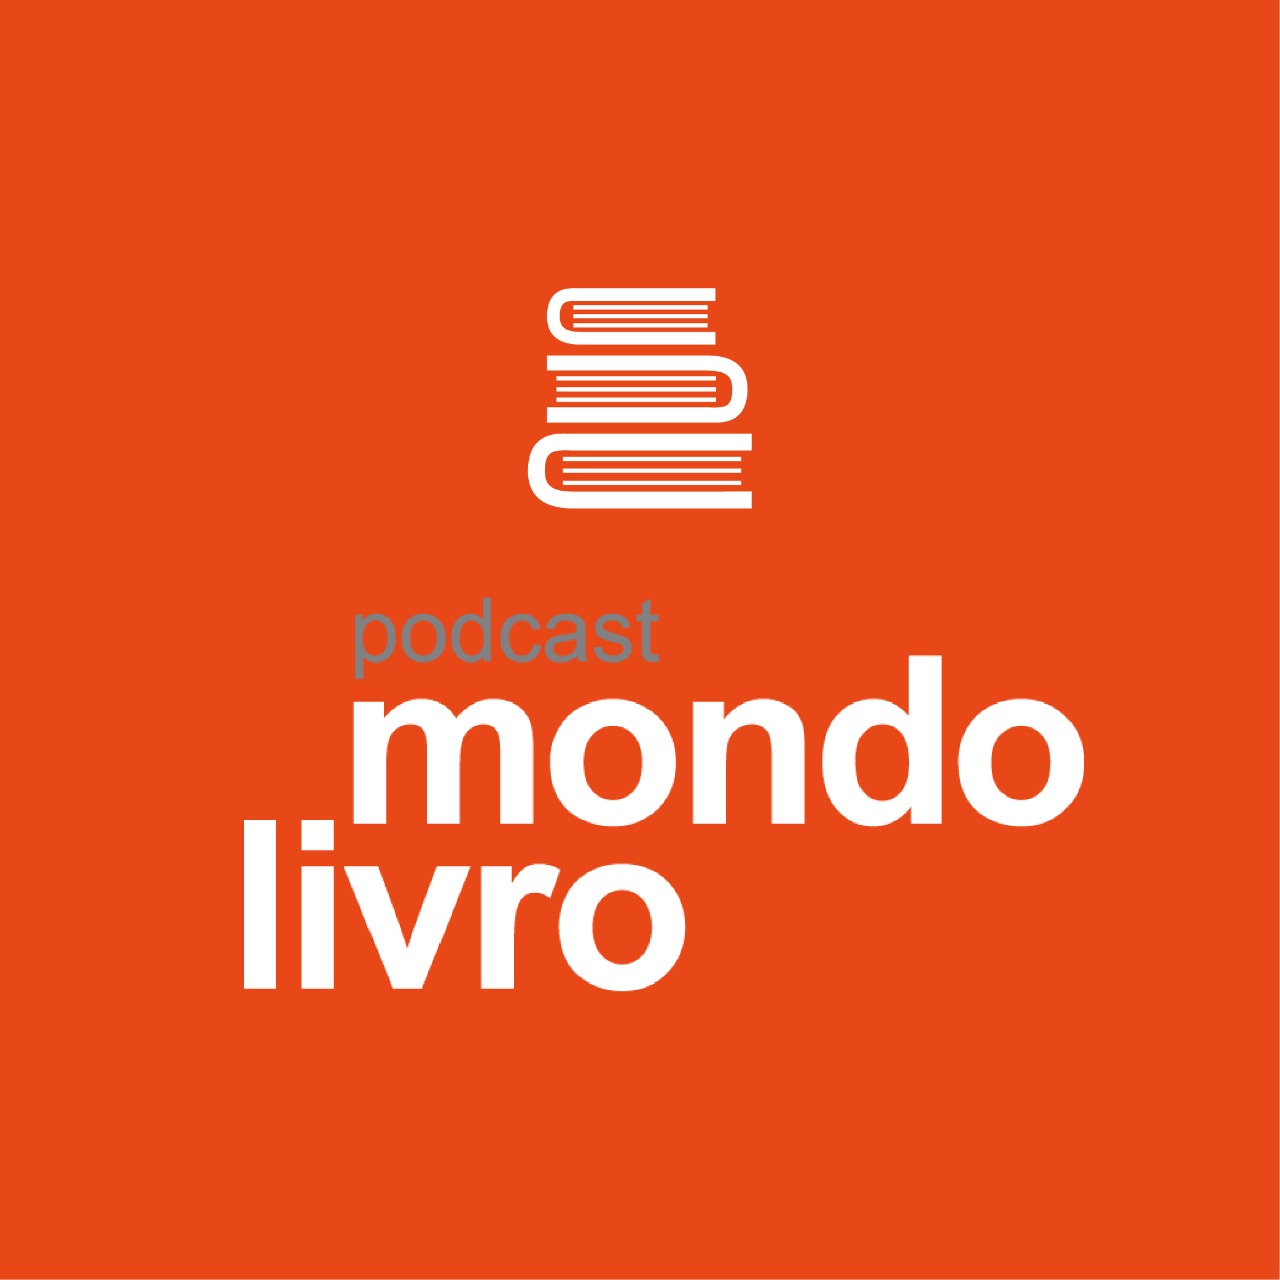 Mondolivro Podcast - Pedro Corrêa do Lago no Mondolivro Podcast